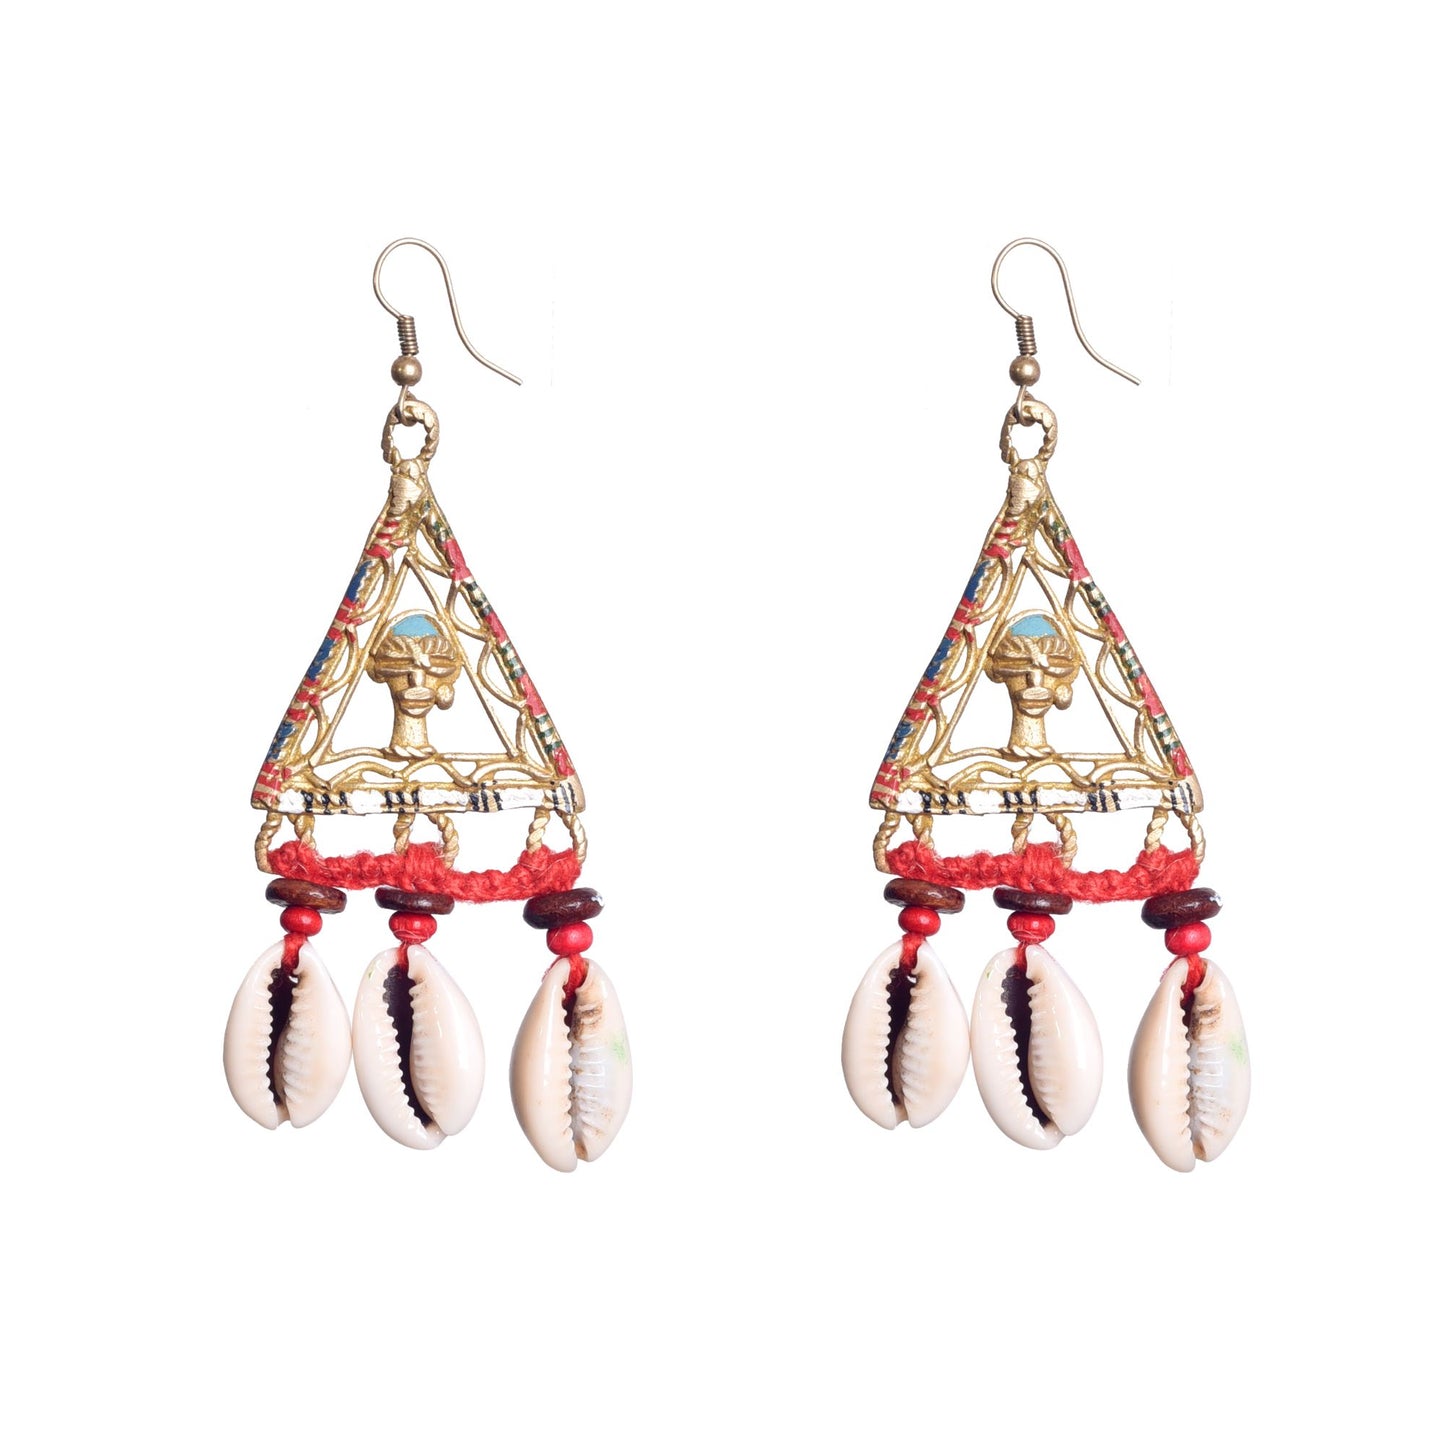 Geometric Elegance: Triangular Brass Conch Earrings